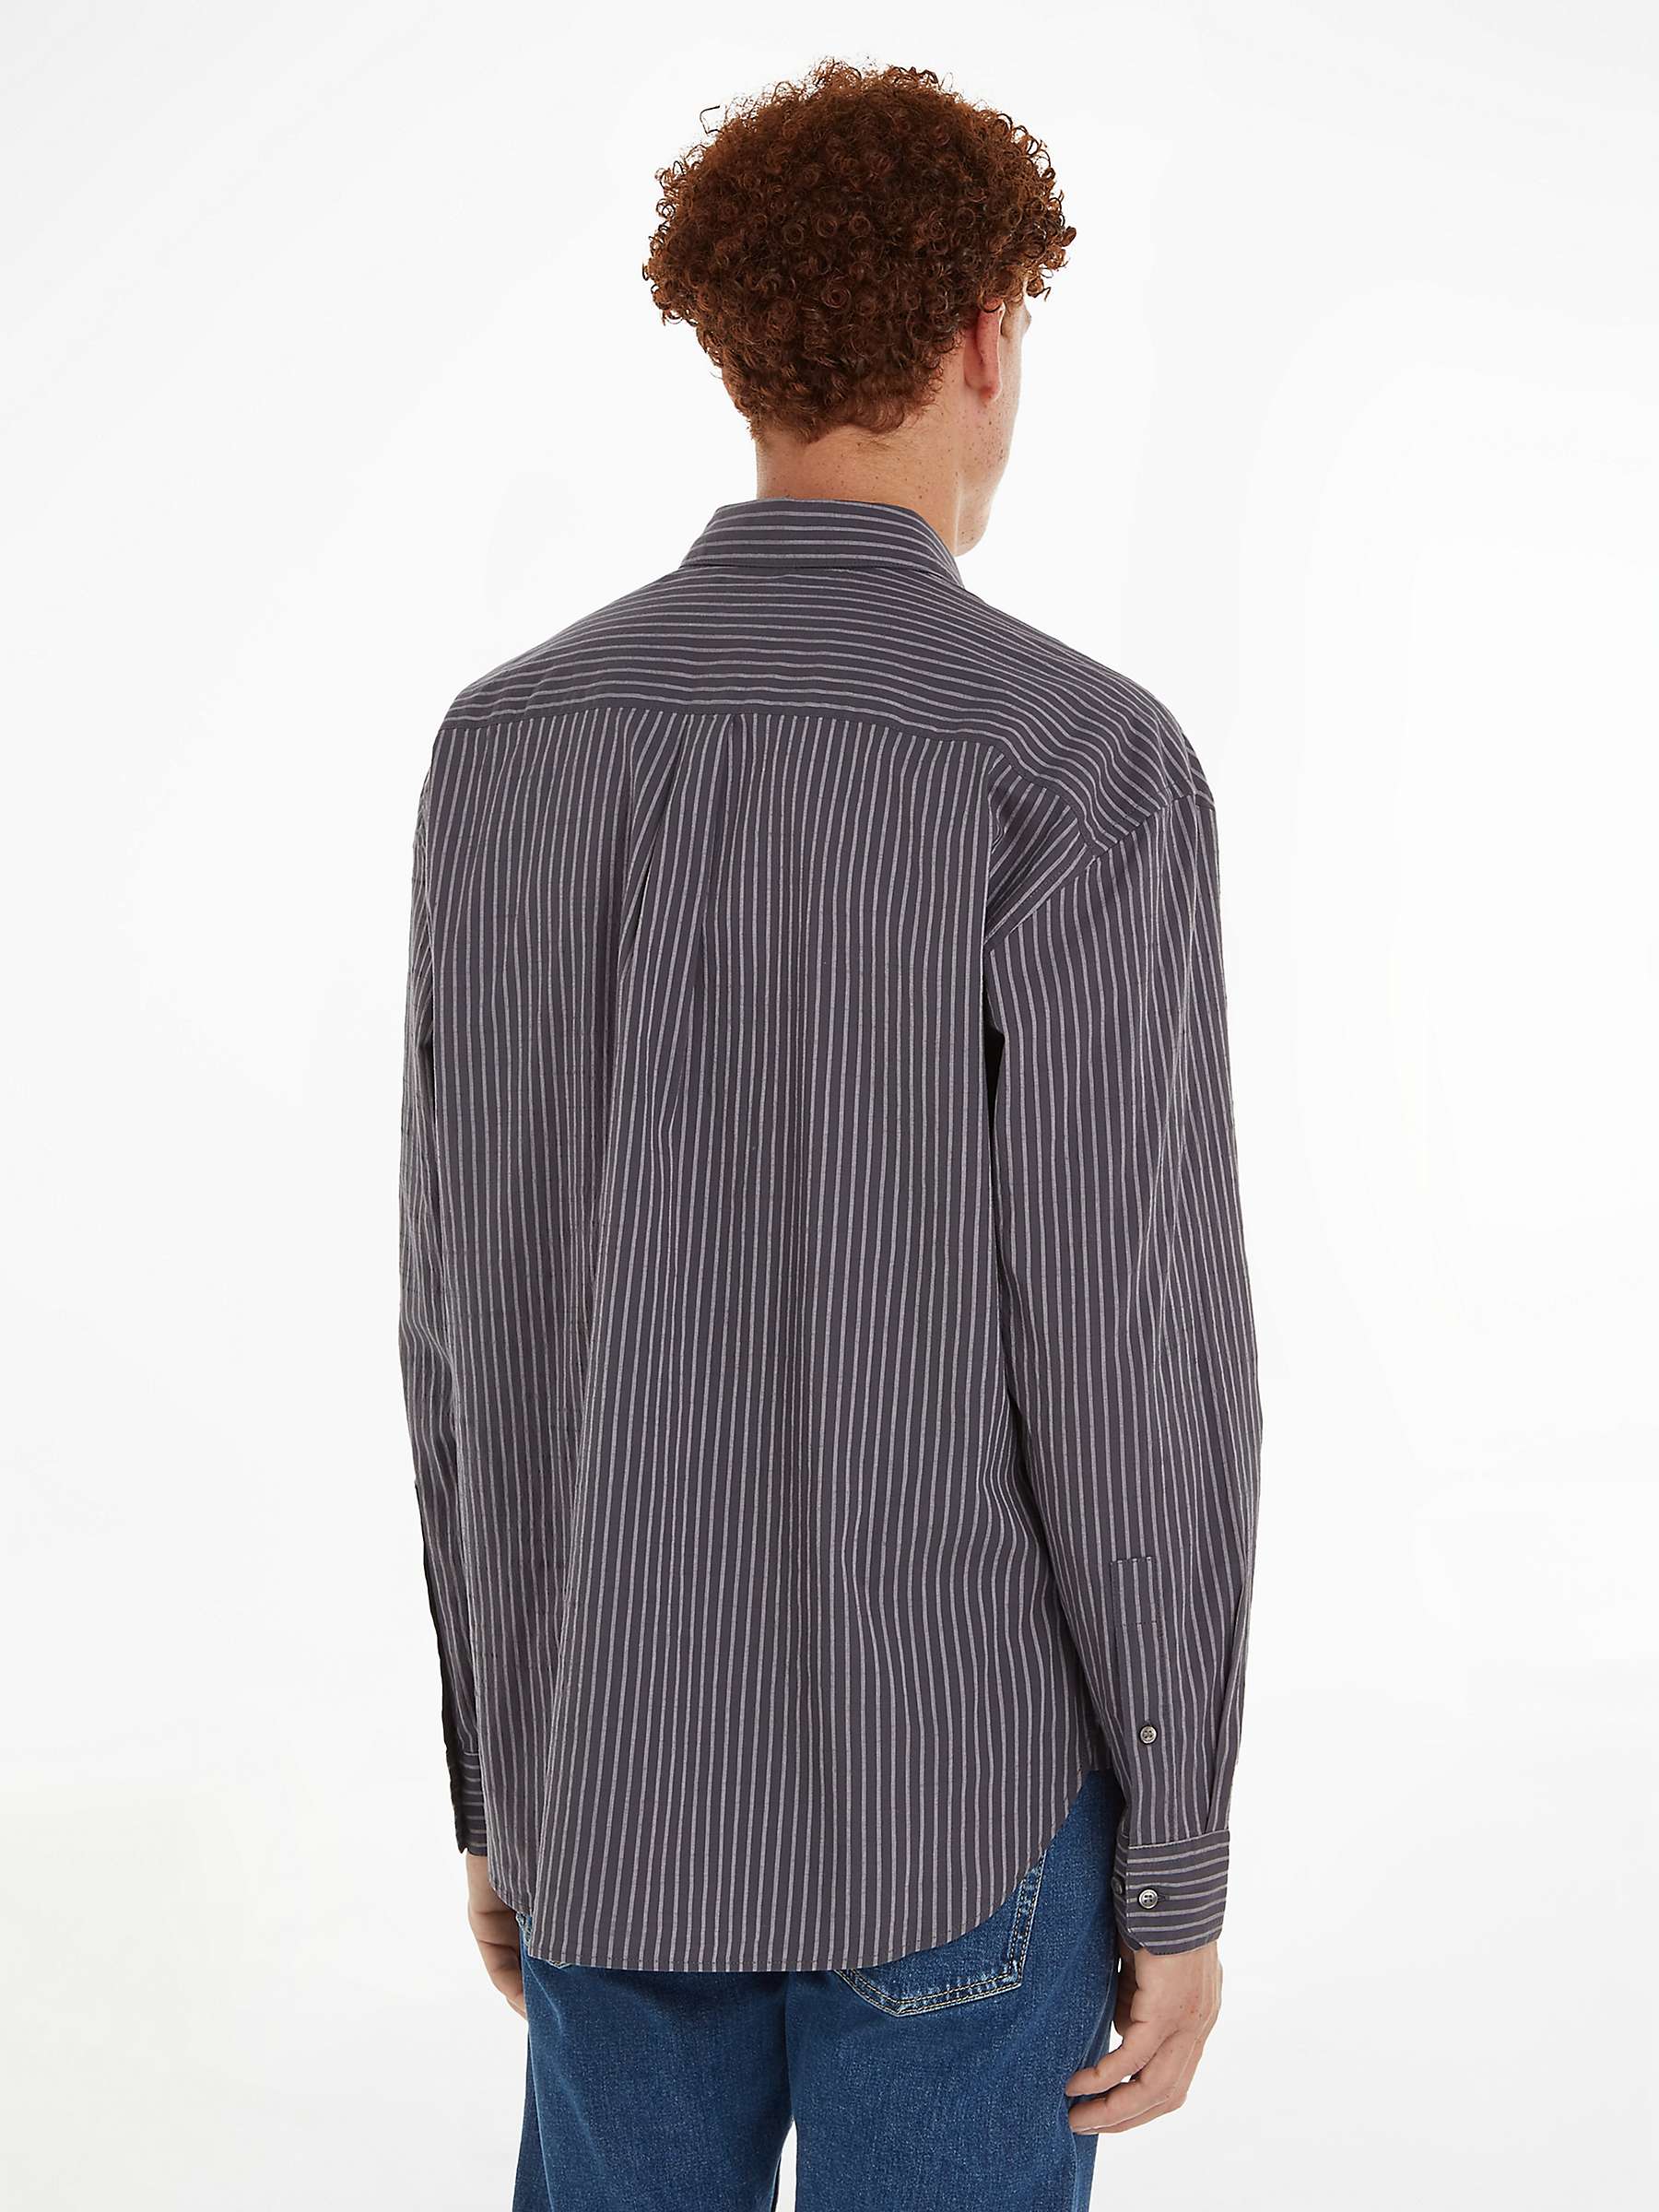 Buy Calvin Klein Stretch Stripe Long Sleeve Shirt, Grey Online at johnlewis.com